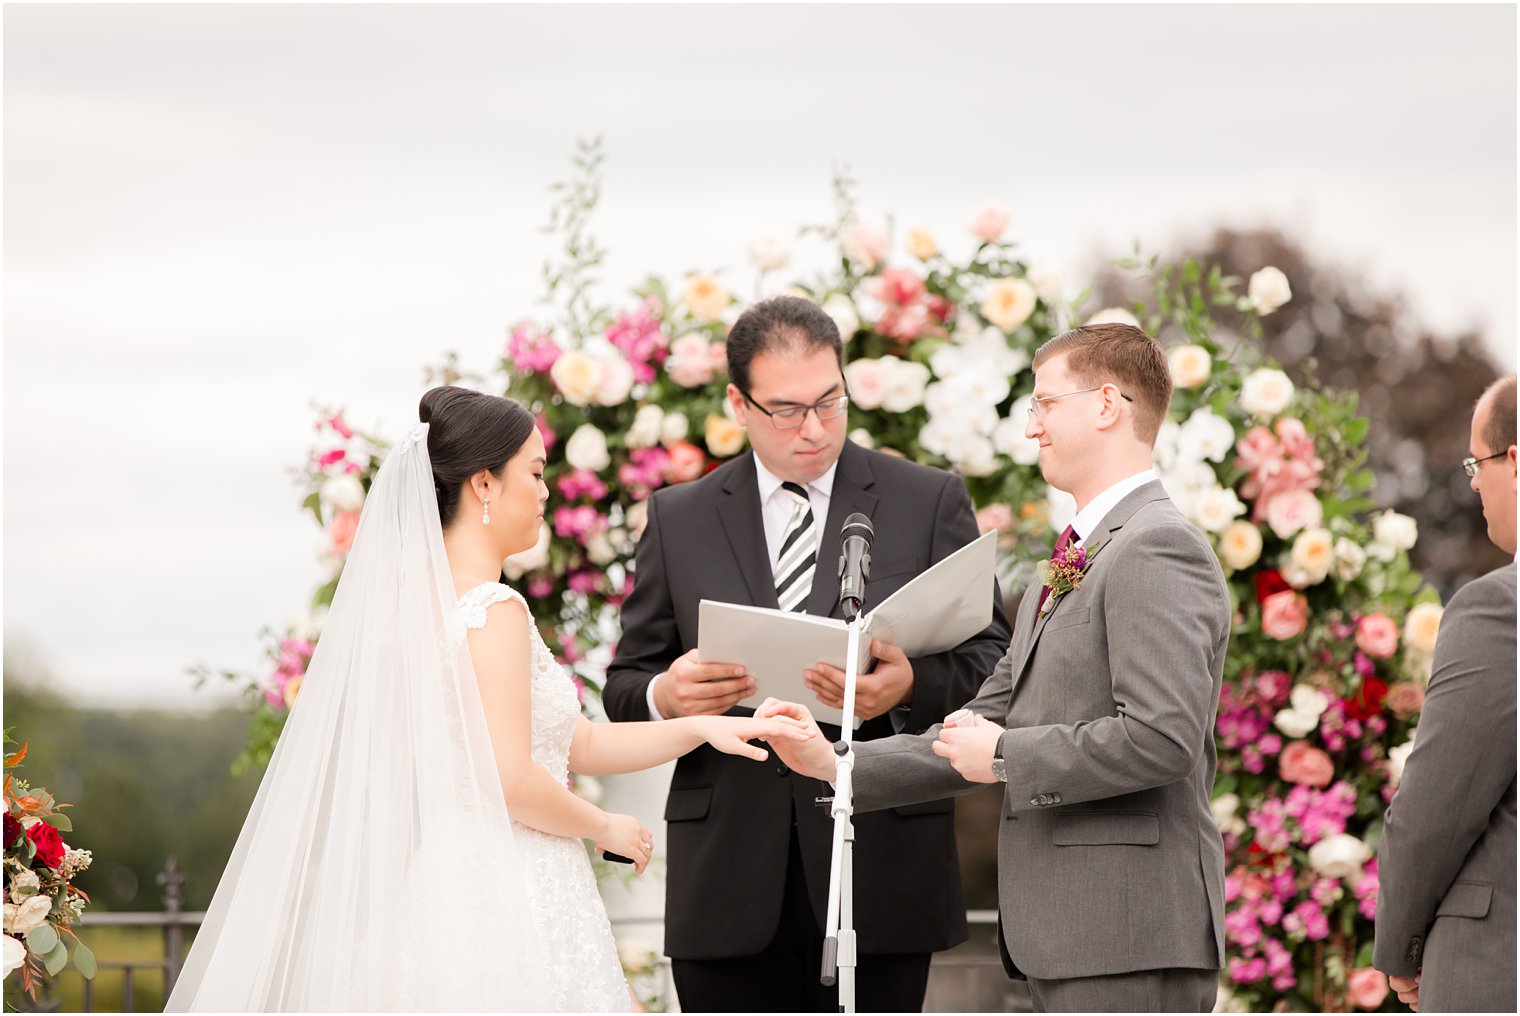 wedding ceremony at Park Chateau Estate photographed by Idalia Photography